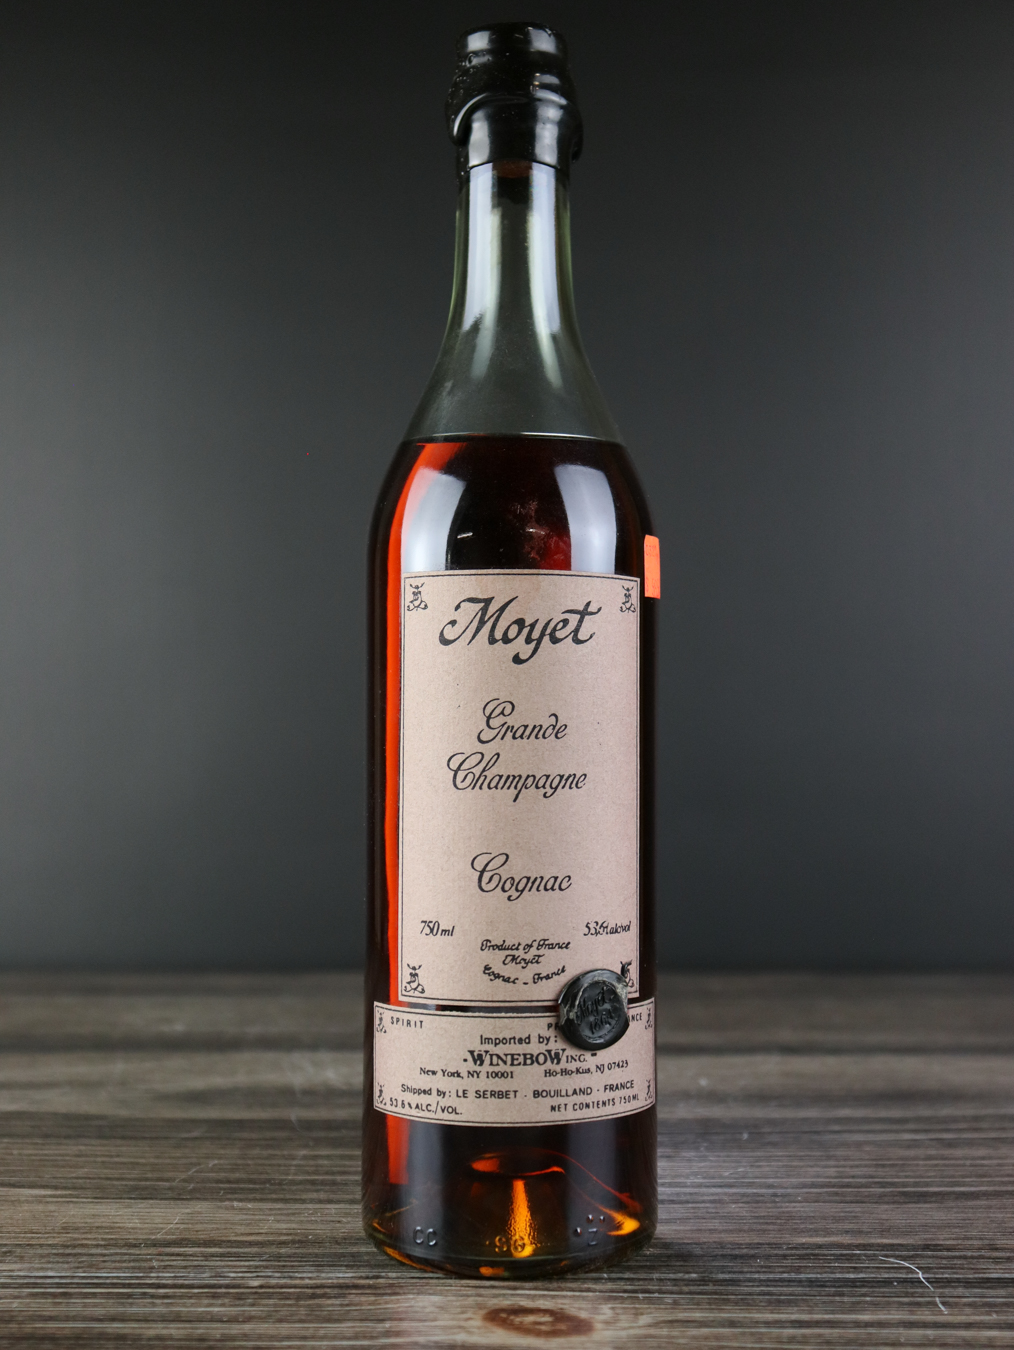 Moyet 'Grande Champagne' Cognac (French Imports) | Unicorn Auctions